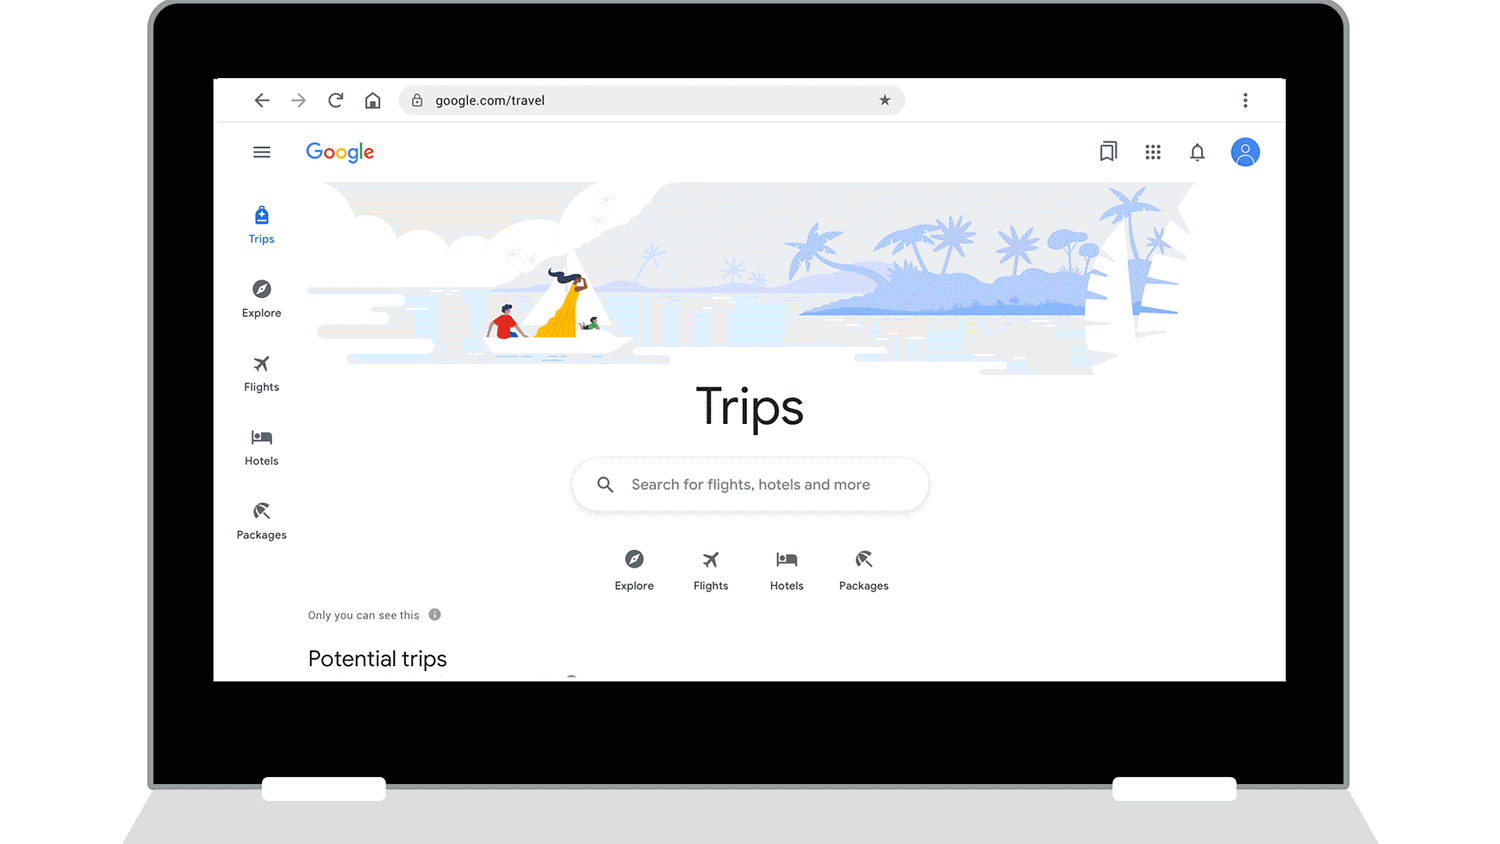 Your trips on desktop